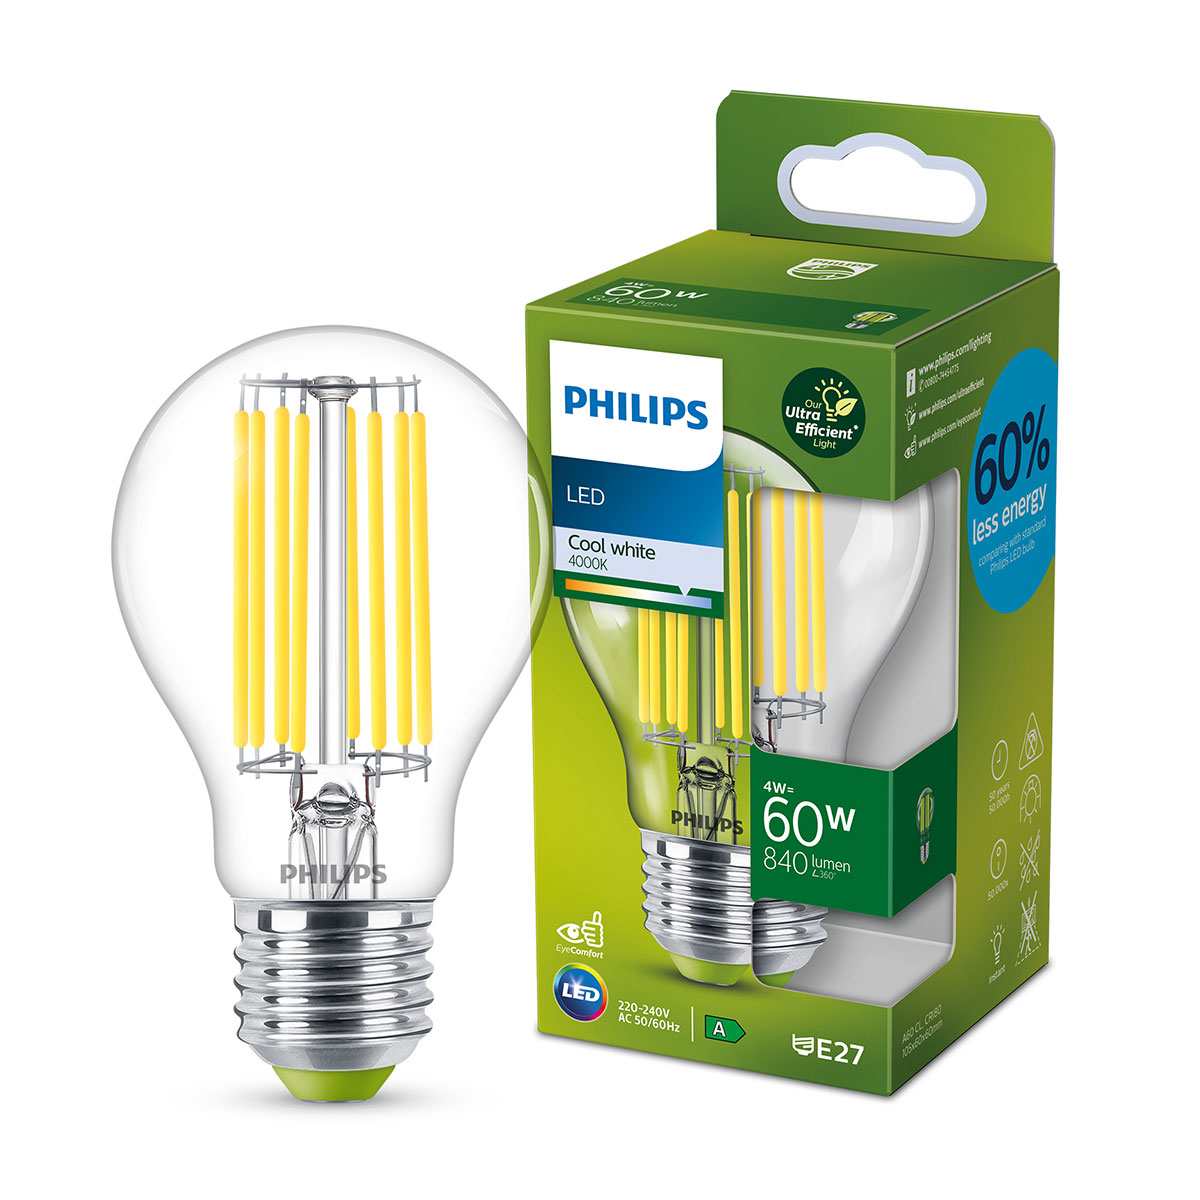 pakket Fondsen variabel IFA: Philips introduceert LED lampen die 50 jaar meegaan - GadgetGear.nl